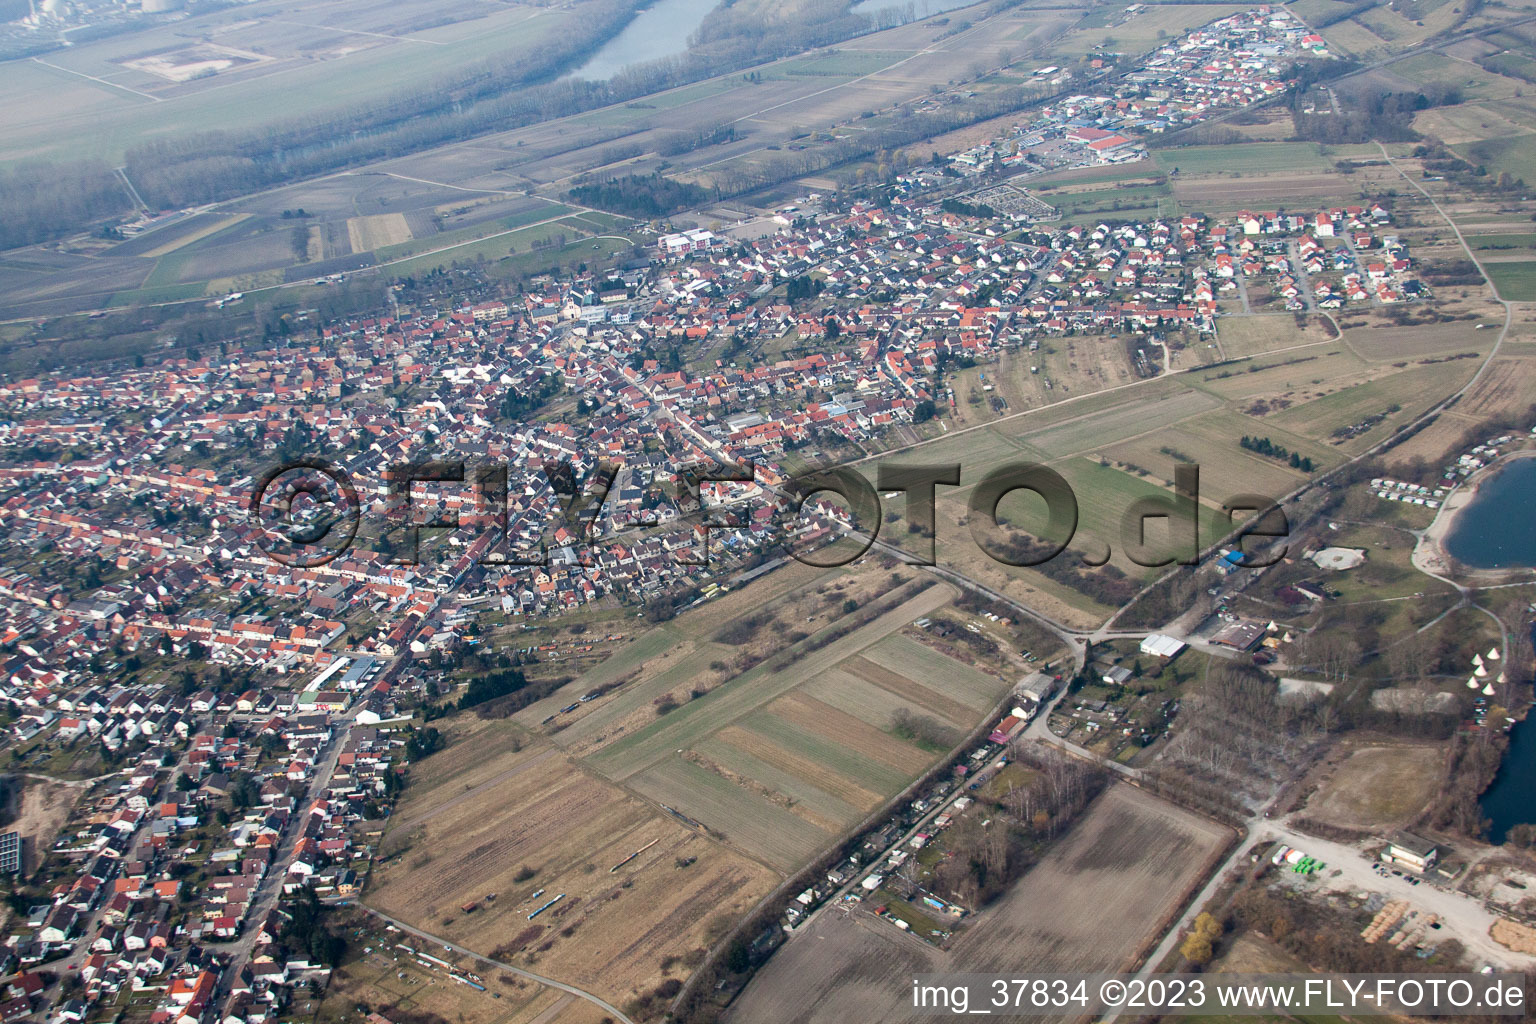 District Oberhausen in Oberhausen-Rheinhausen in the state Baden-Wuerttemberg, Germany from the drone perspective